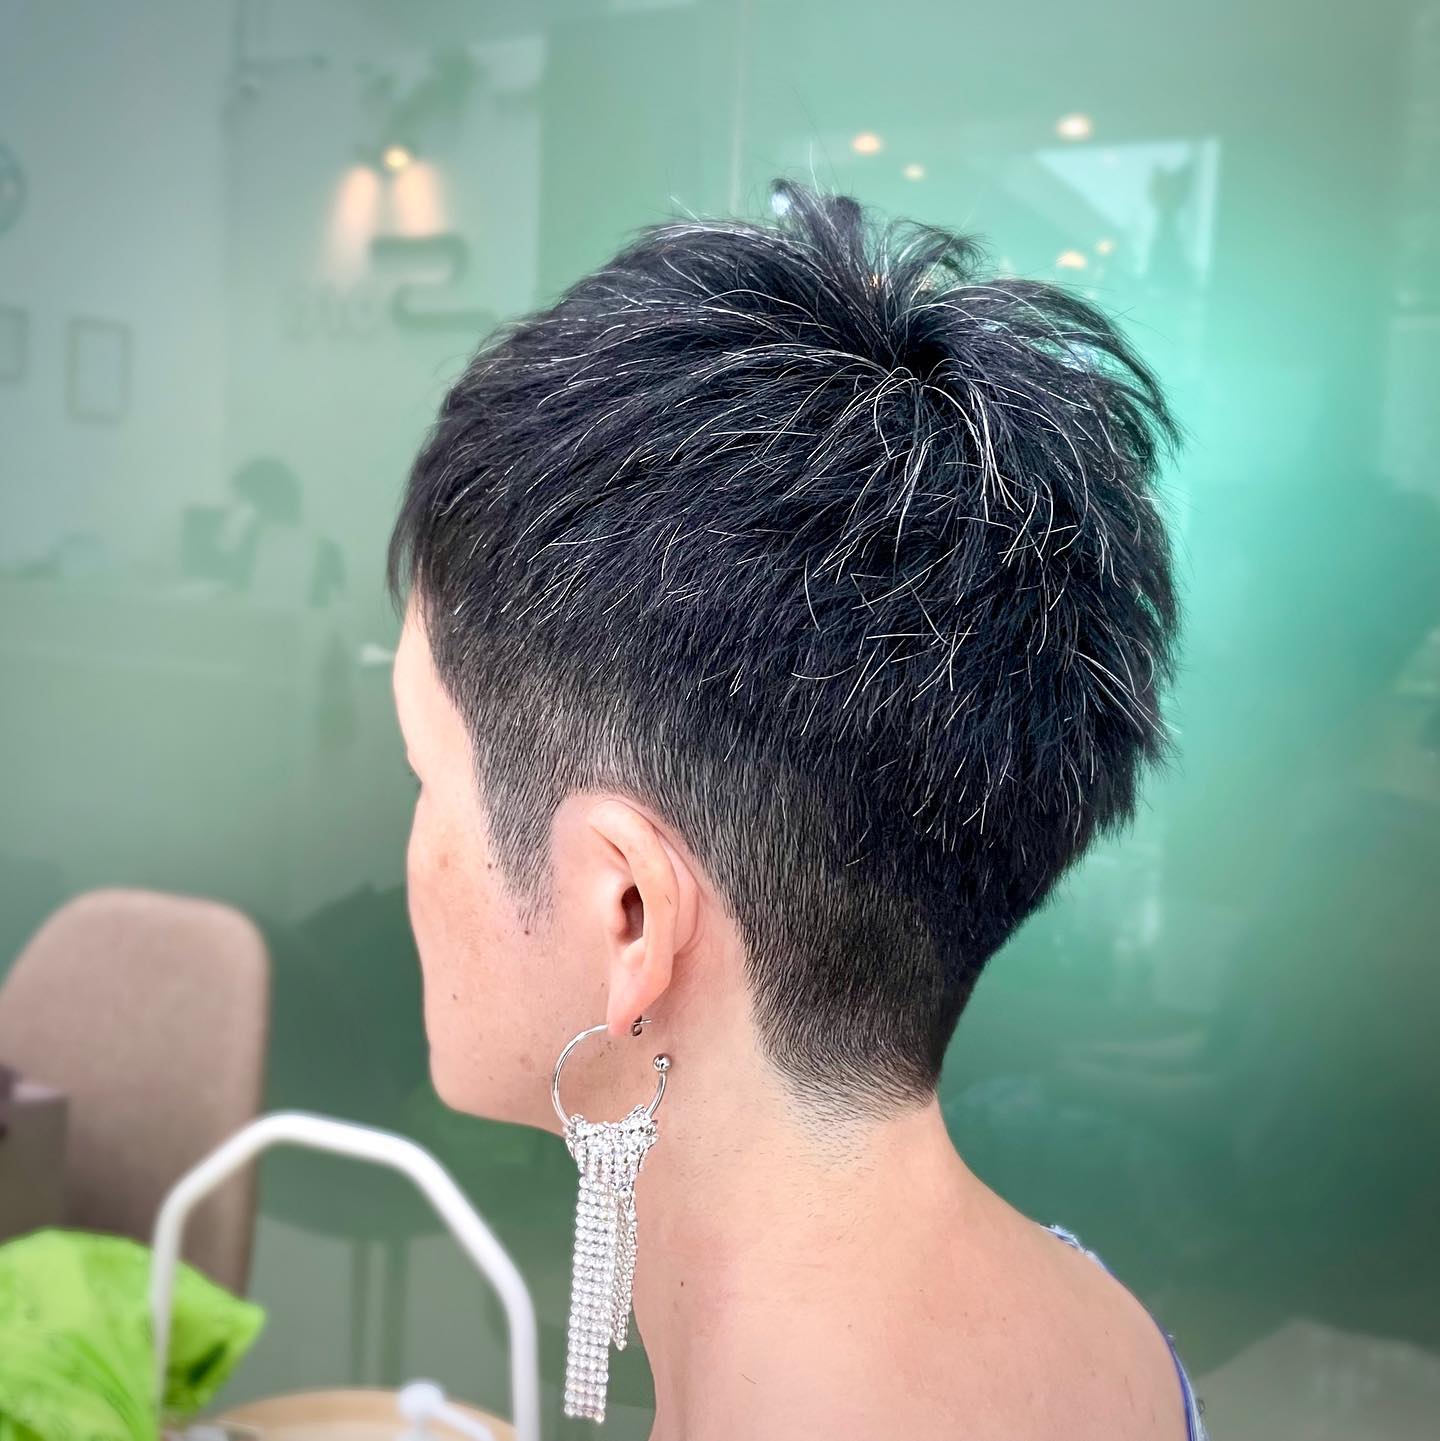 Spiky short × Women  Hair cut  600B+ (women)
 500B+ (Men)  by Thai Hairdresser️  …………………………
ร้าน Hair Room Sora 299/7 ชั้น1, Sukhumvit Living Town, ซอยสุขุมวิท21(อโศก)
️ 02-169-1622
 Line : @575zzlqc (มี @)
️** บัตรเครดิตขั้นต่ำ 2000 บาท **
#Hairroomsora #Hairroomsorabangkok #🤖 #Hairstyle #Sukhumvitlivingtown #sukhumvit21 #Japanesesalon #DigitalPerm #デジパ #ヘアールームソラ #fashioncolor #ร้านซาลอนญี่ปุ่น #ซาลอน #ทำผมรับปริญญา #ทำผมออกงาน #รับทำผม #ดัดดิจิตอล #ยืดผม #ย้อมผม #Repost